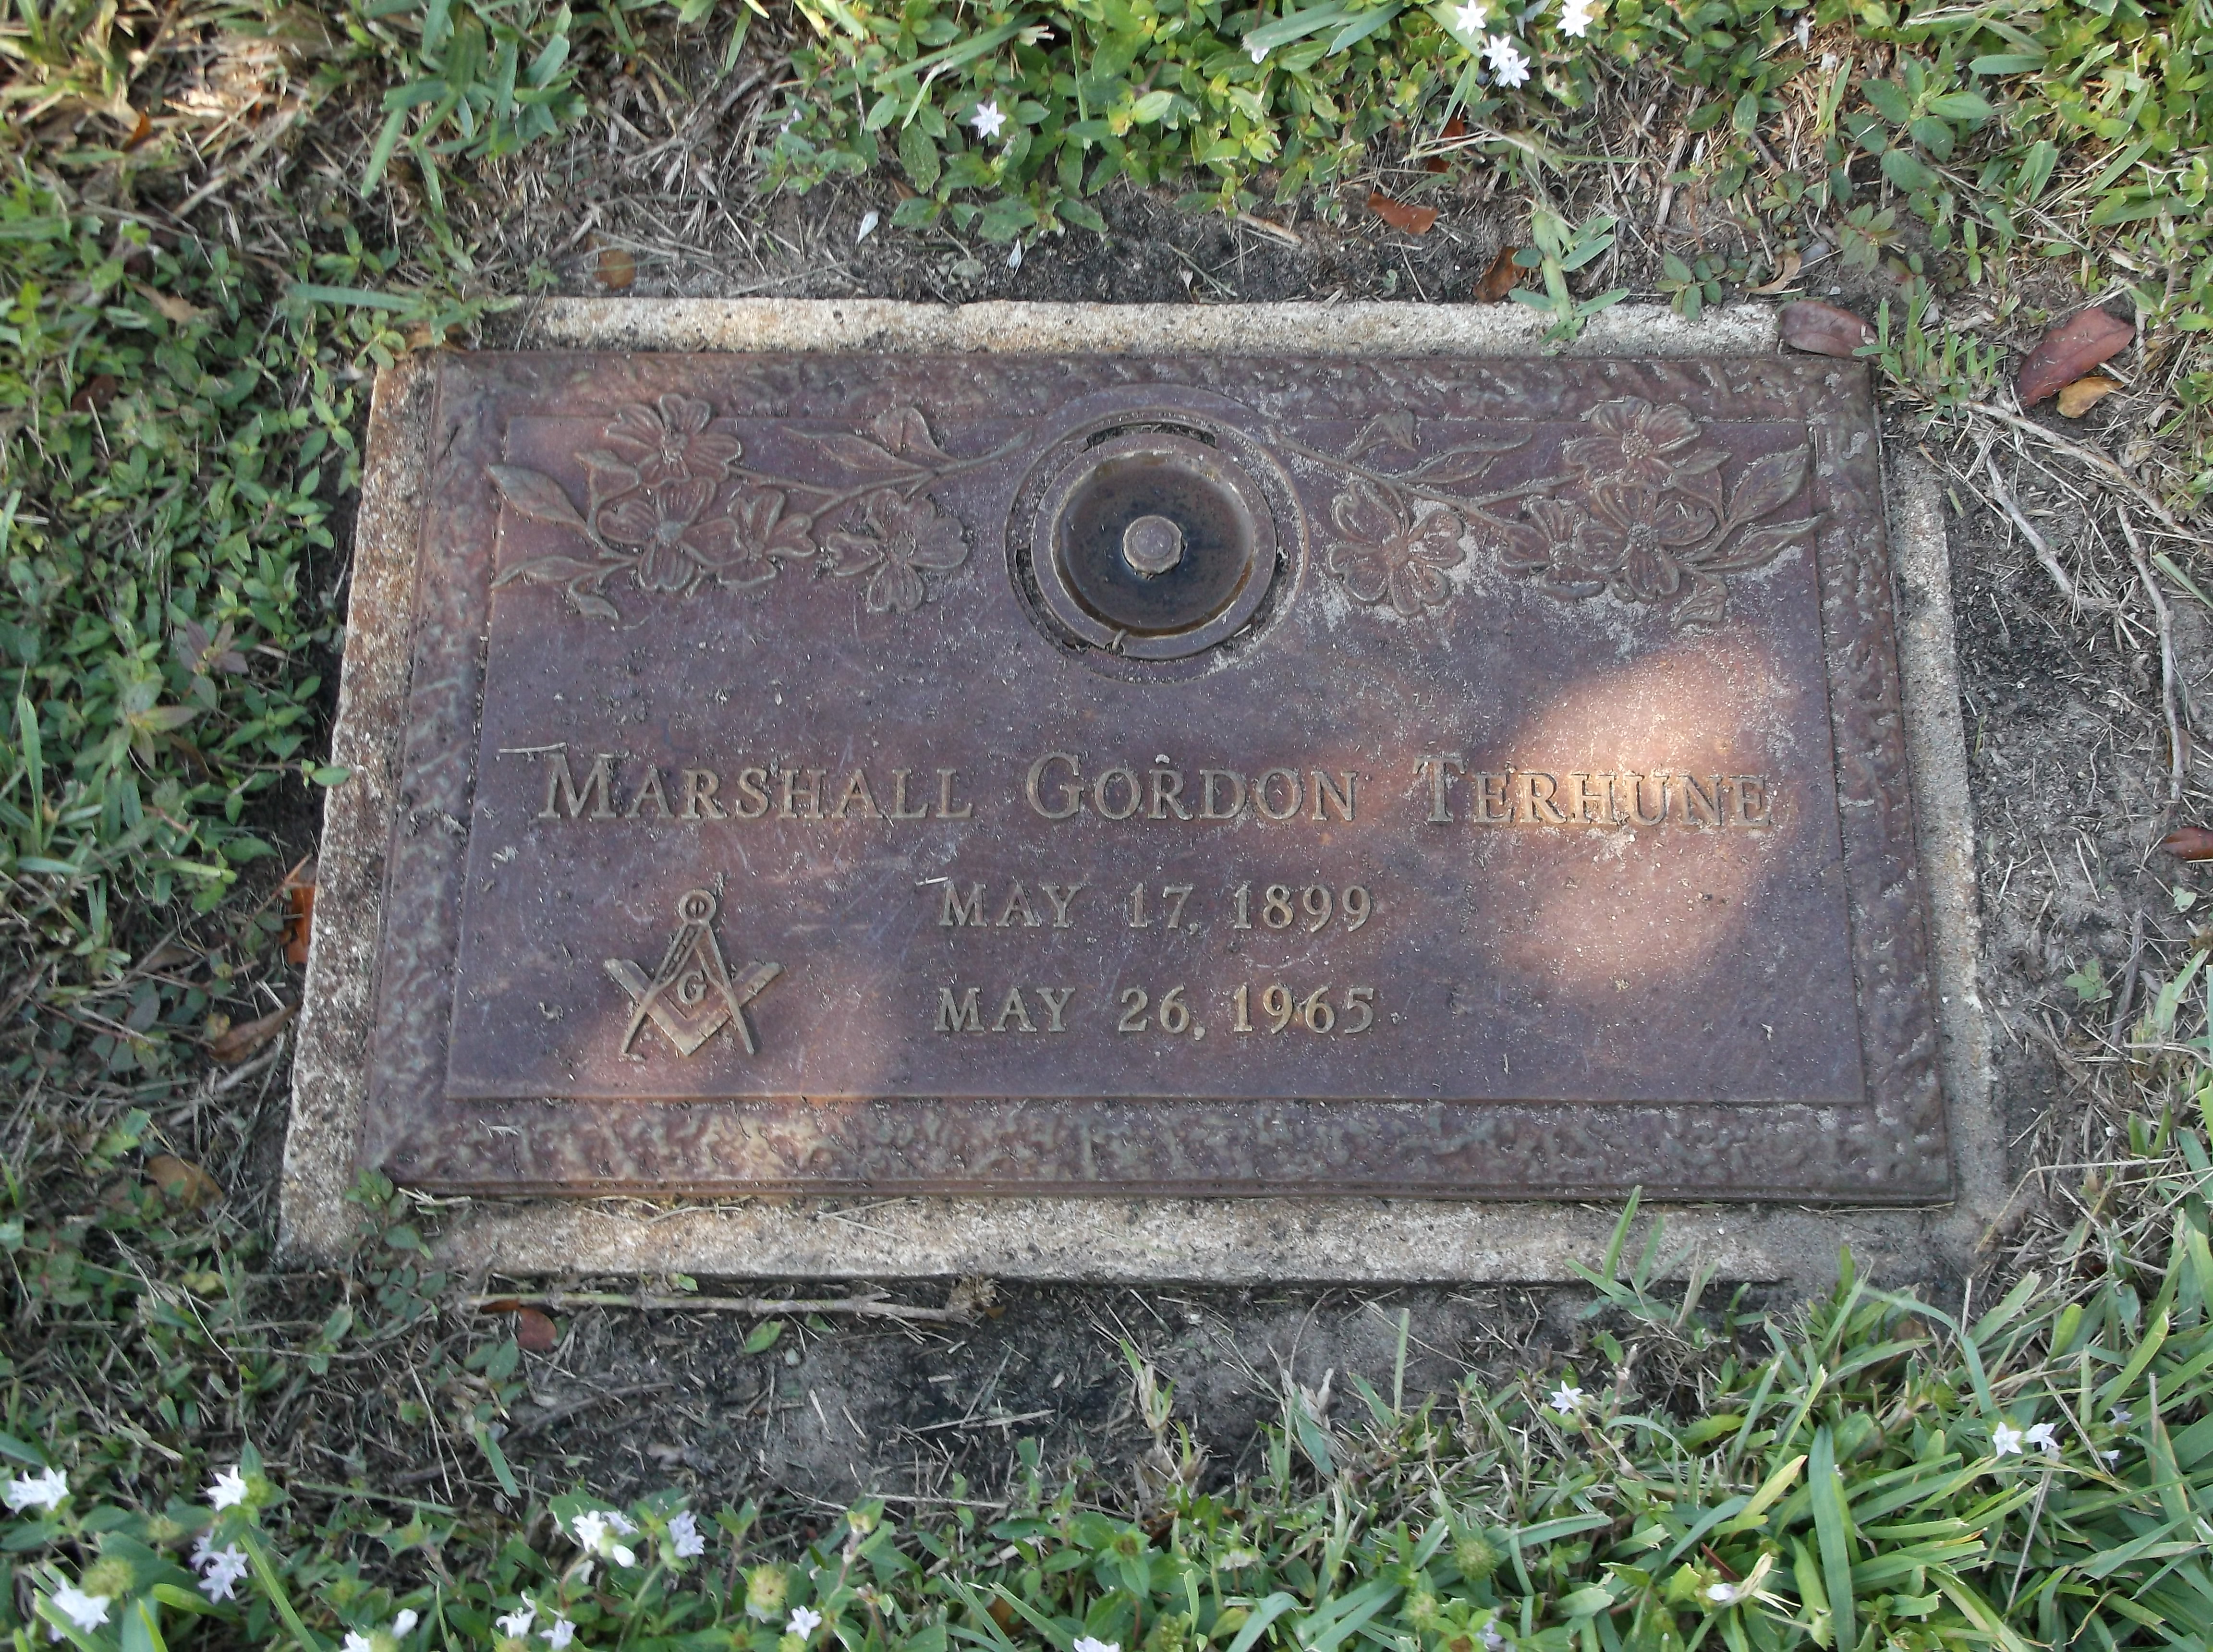 Marshall Gordon Terhune